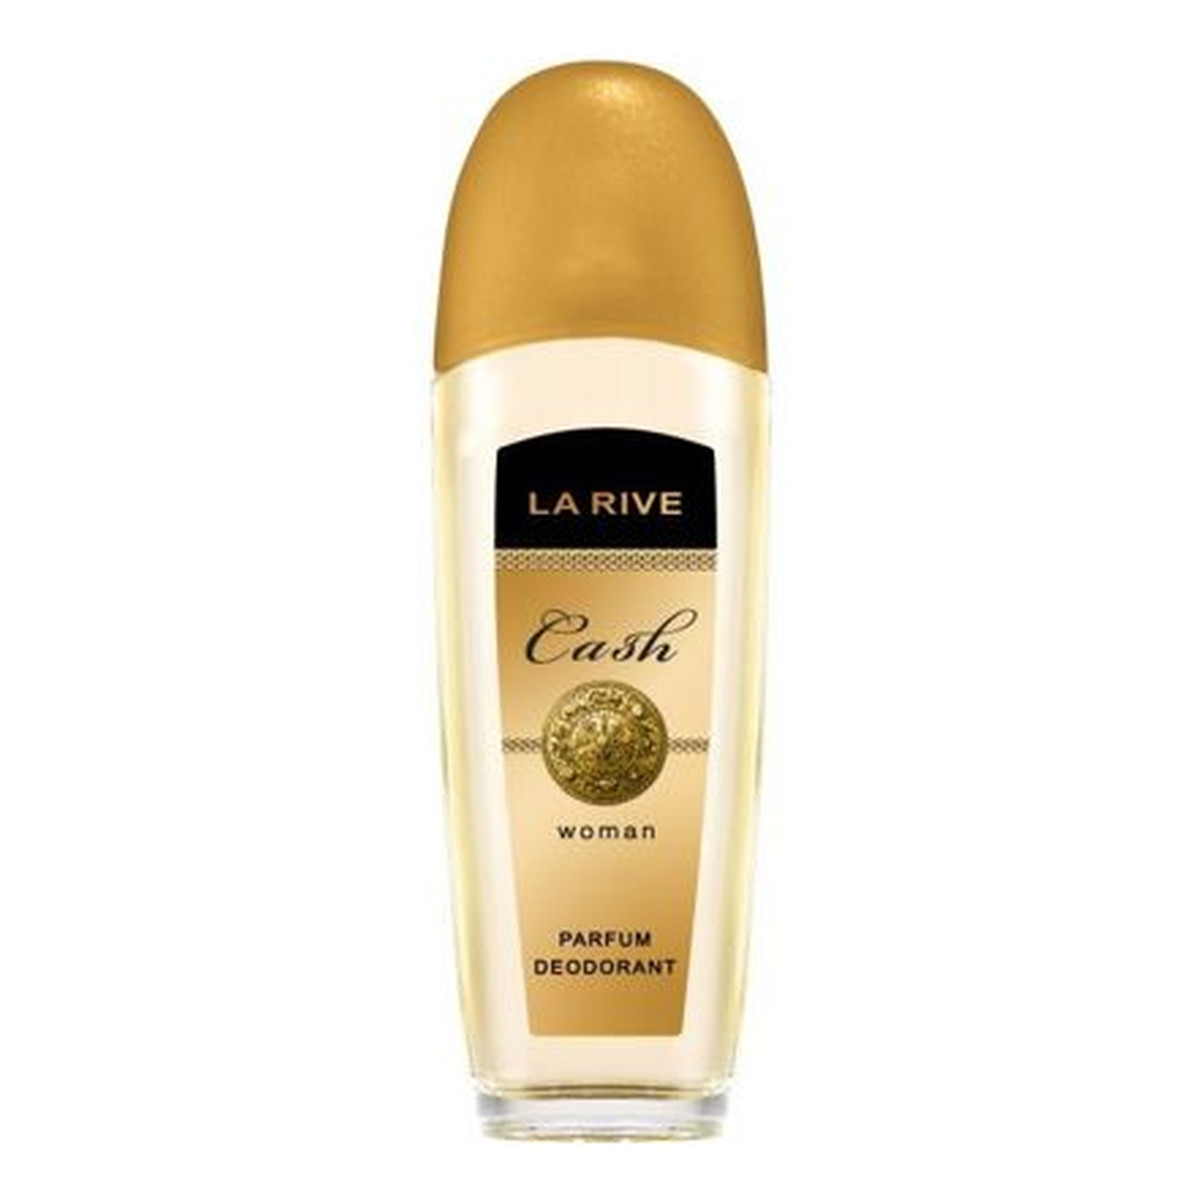 La Rive Cash Women Dezodorant Perfumowany 75ml